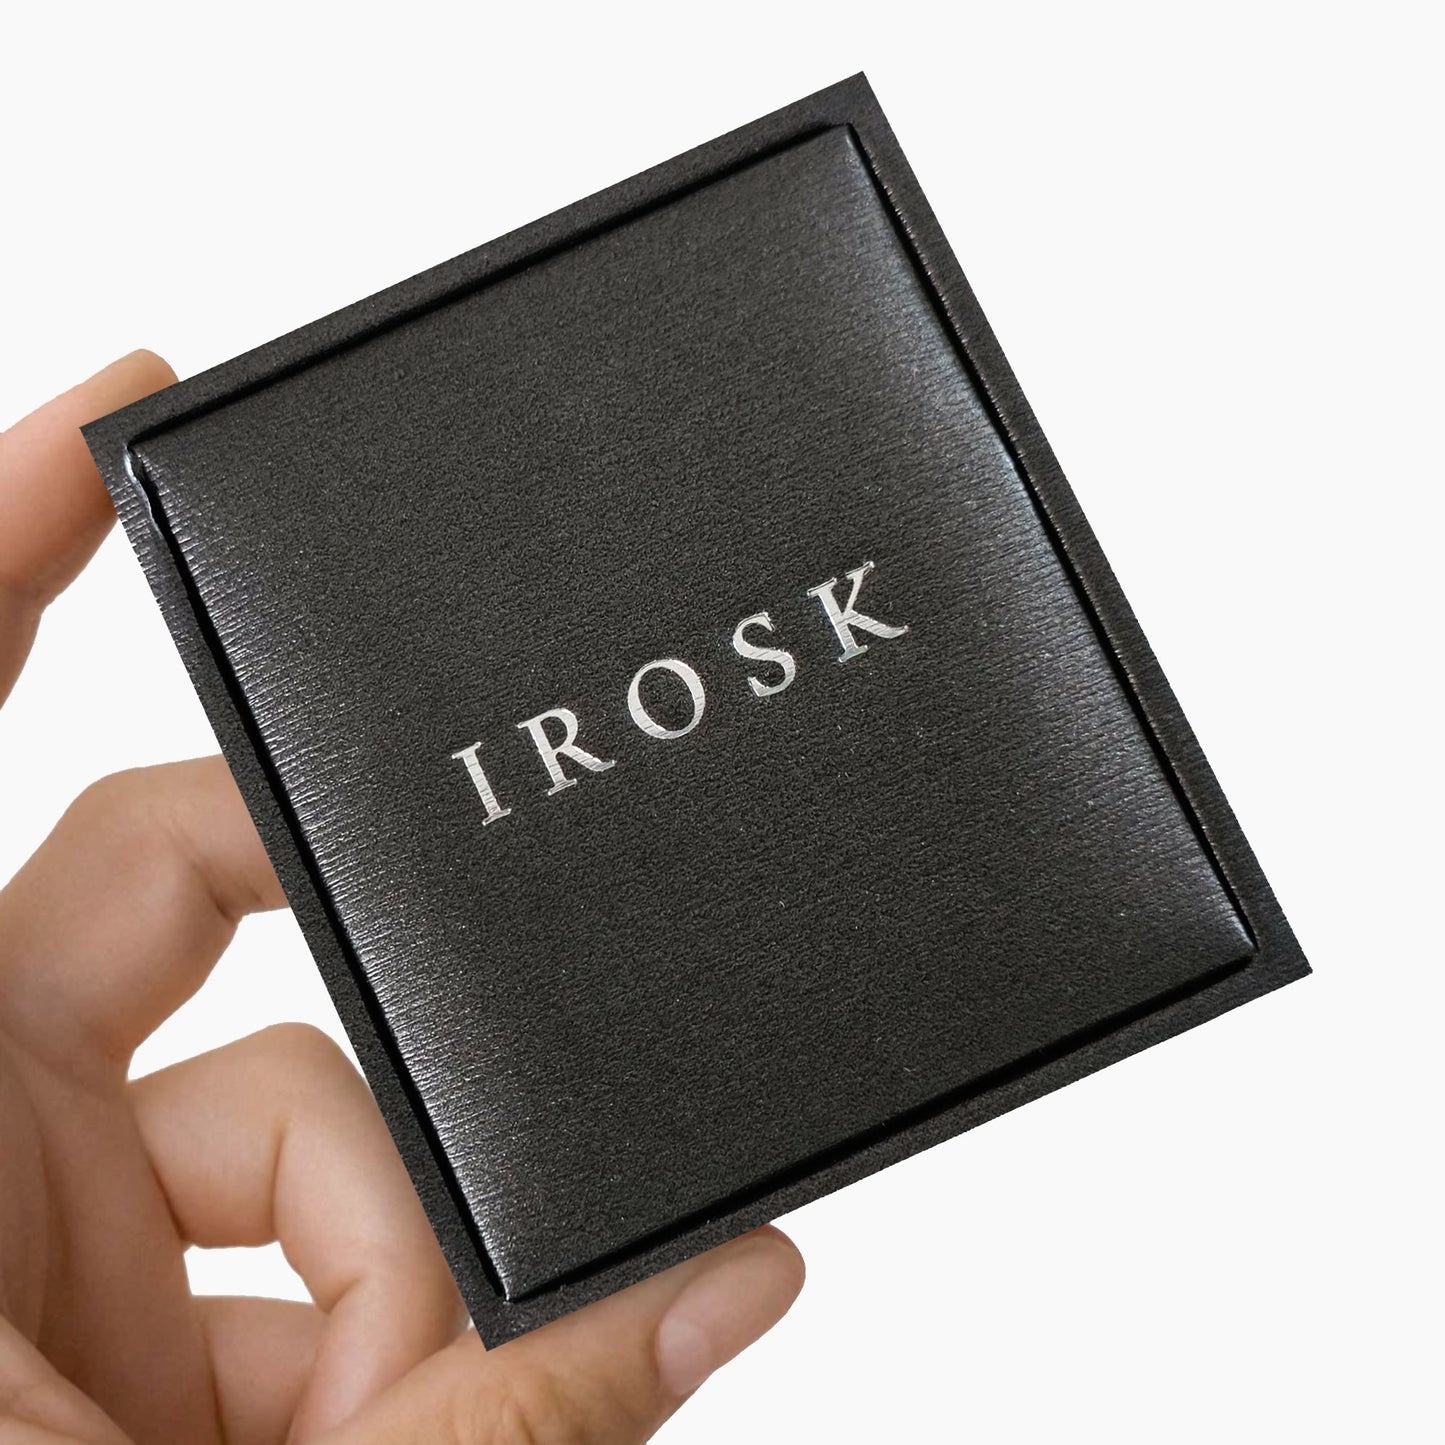 Irosk Eternity necklace